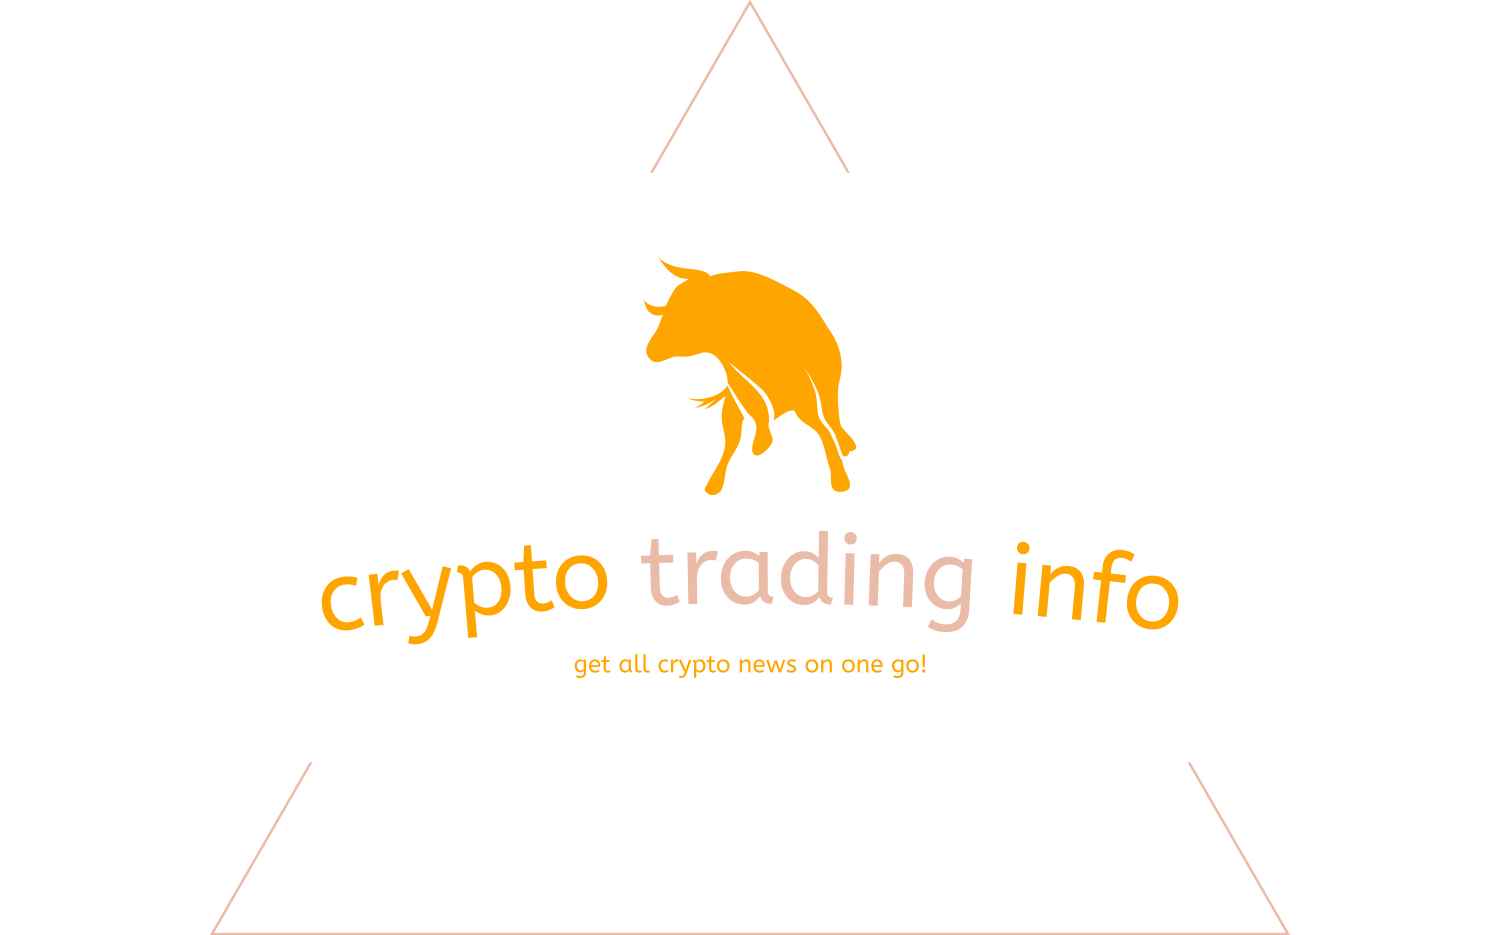 Crypto Trading Info cryptotradinginfo.com